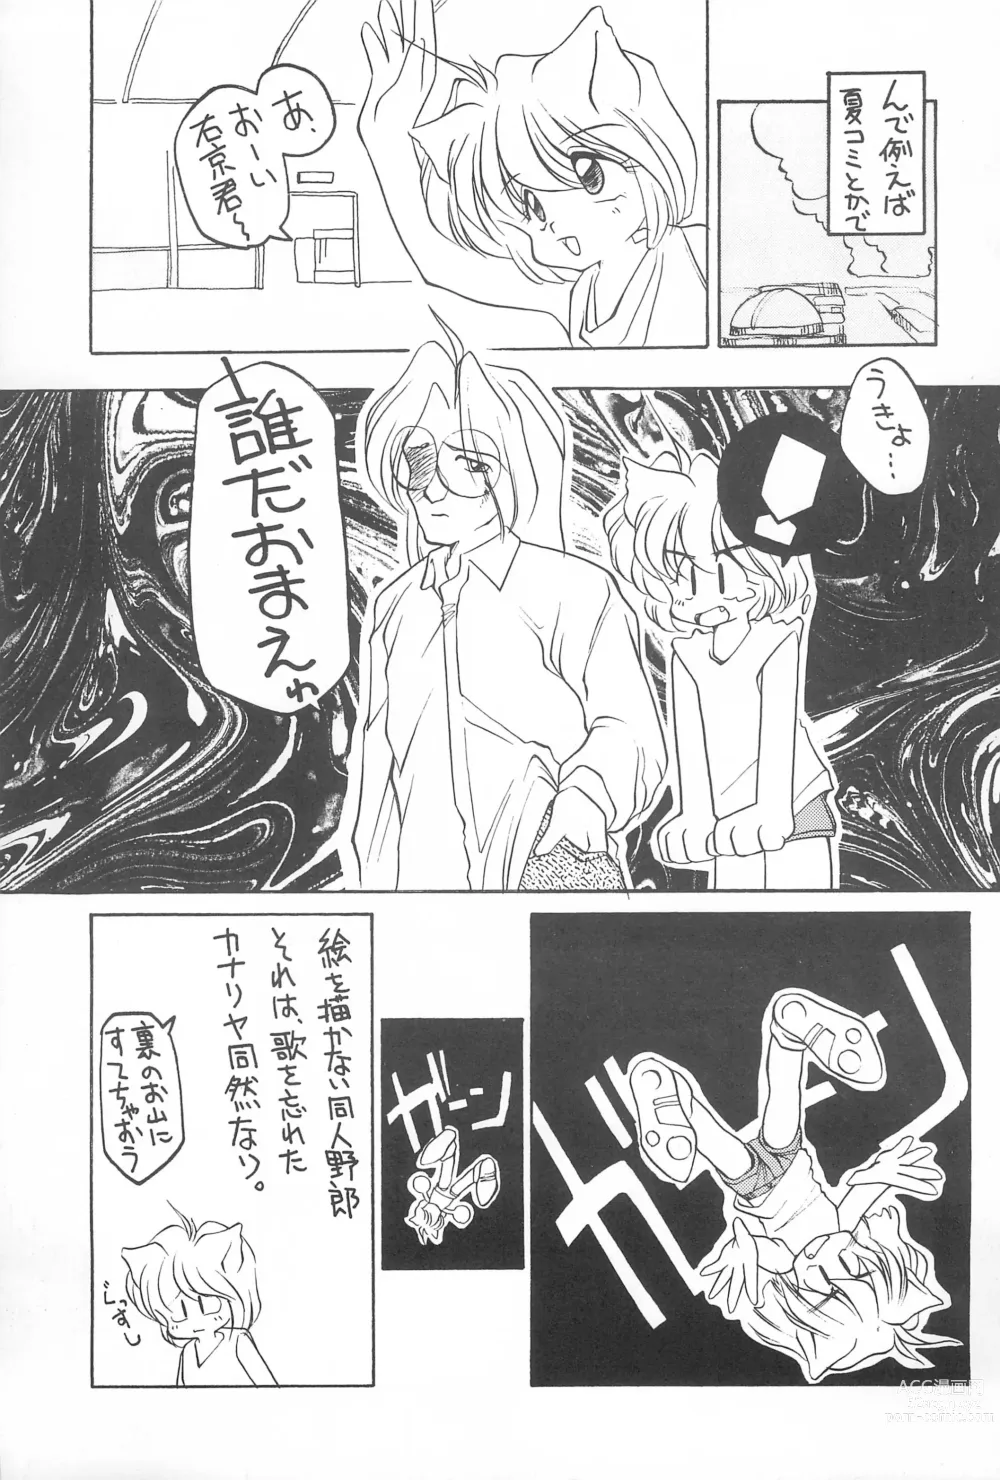 Page 7 of doujinshi LONG GOOD BYE